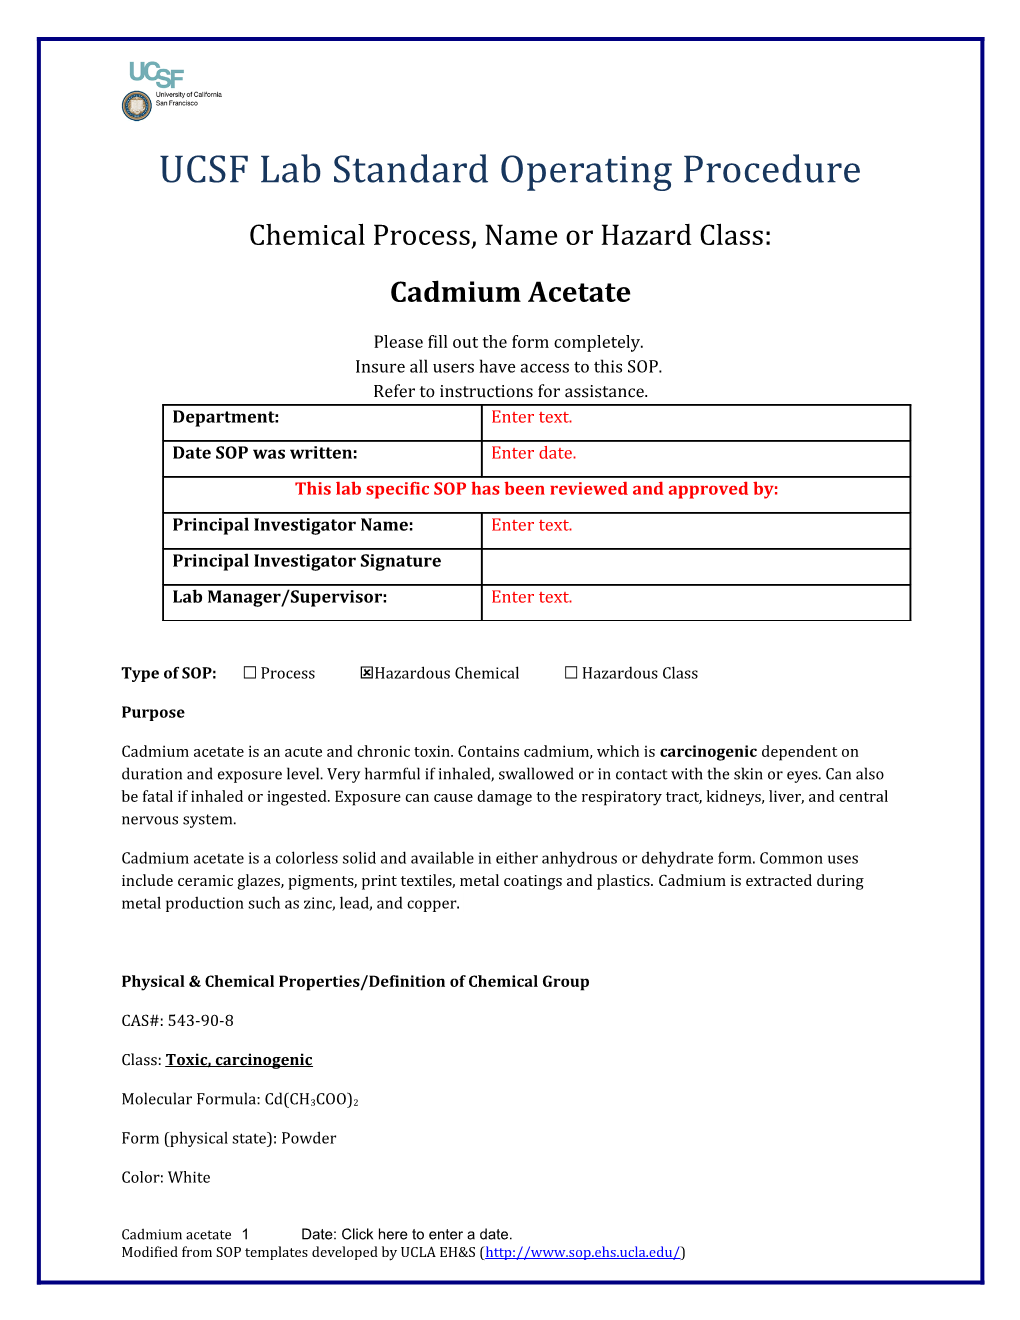 UCSF Lab Standard Operating Procedure s35